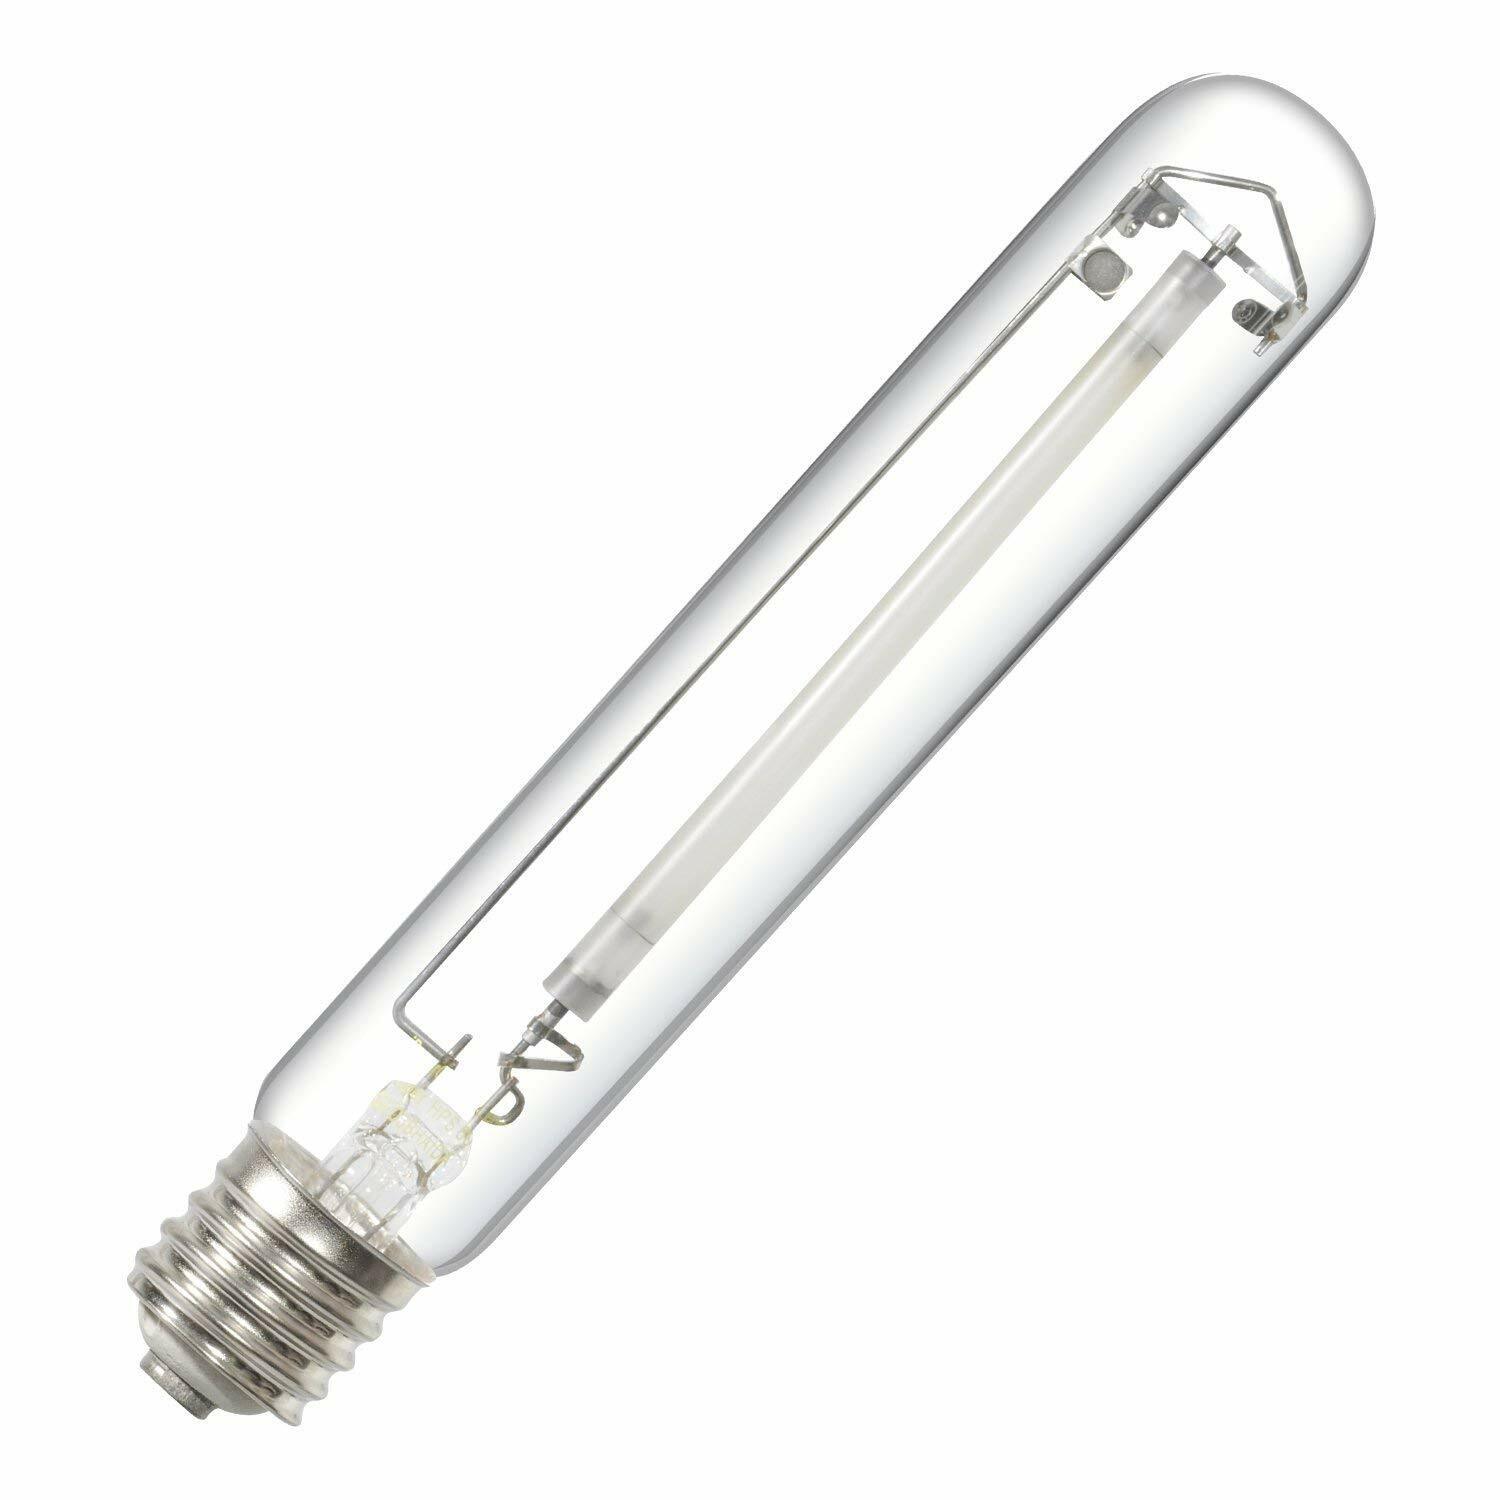 iPower 600 Watt High Pressure Sodium HPS Grow Light Bulb Lamp 1/2/4/6/12-PACK